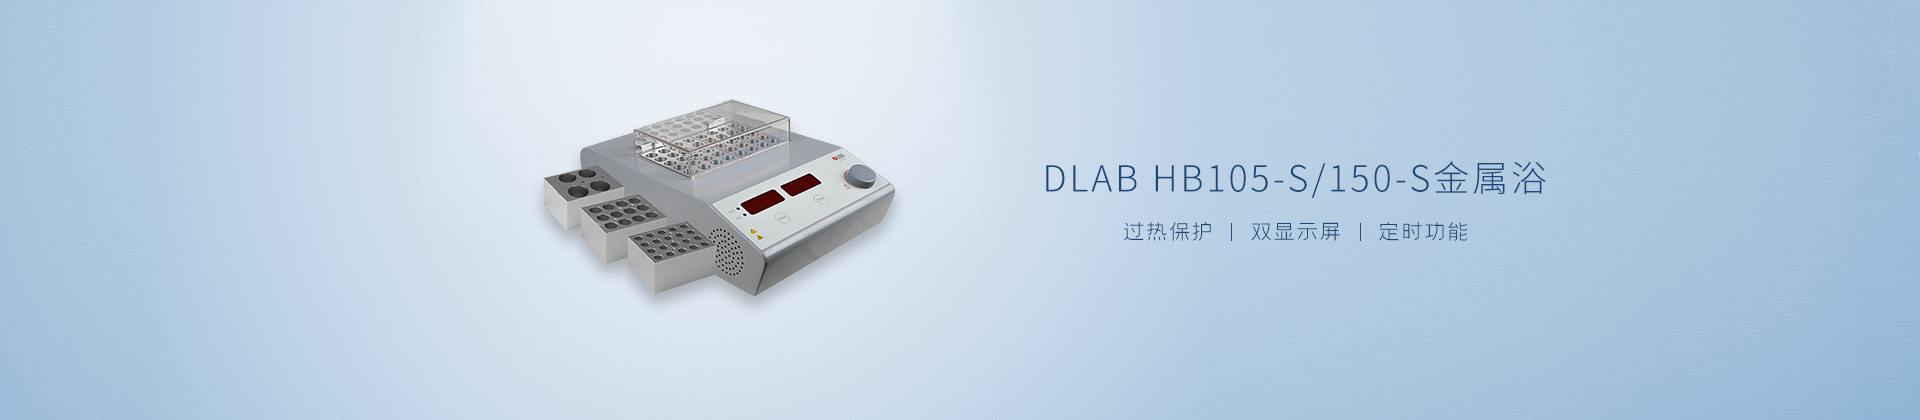 DLAB HB105-S/150-S金属浴